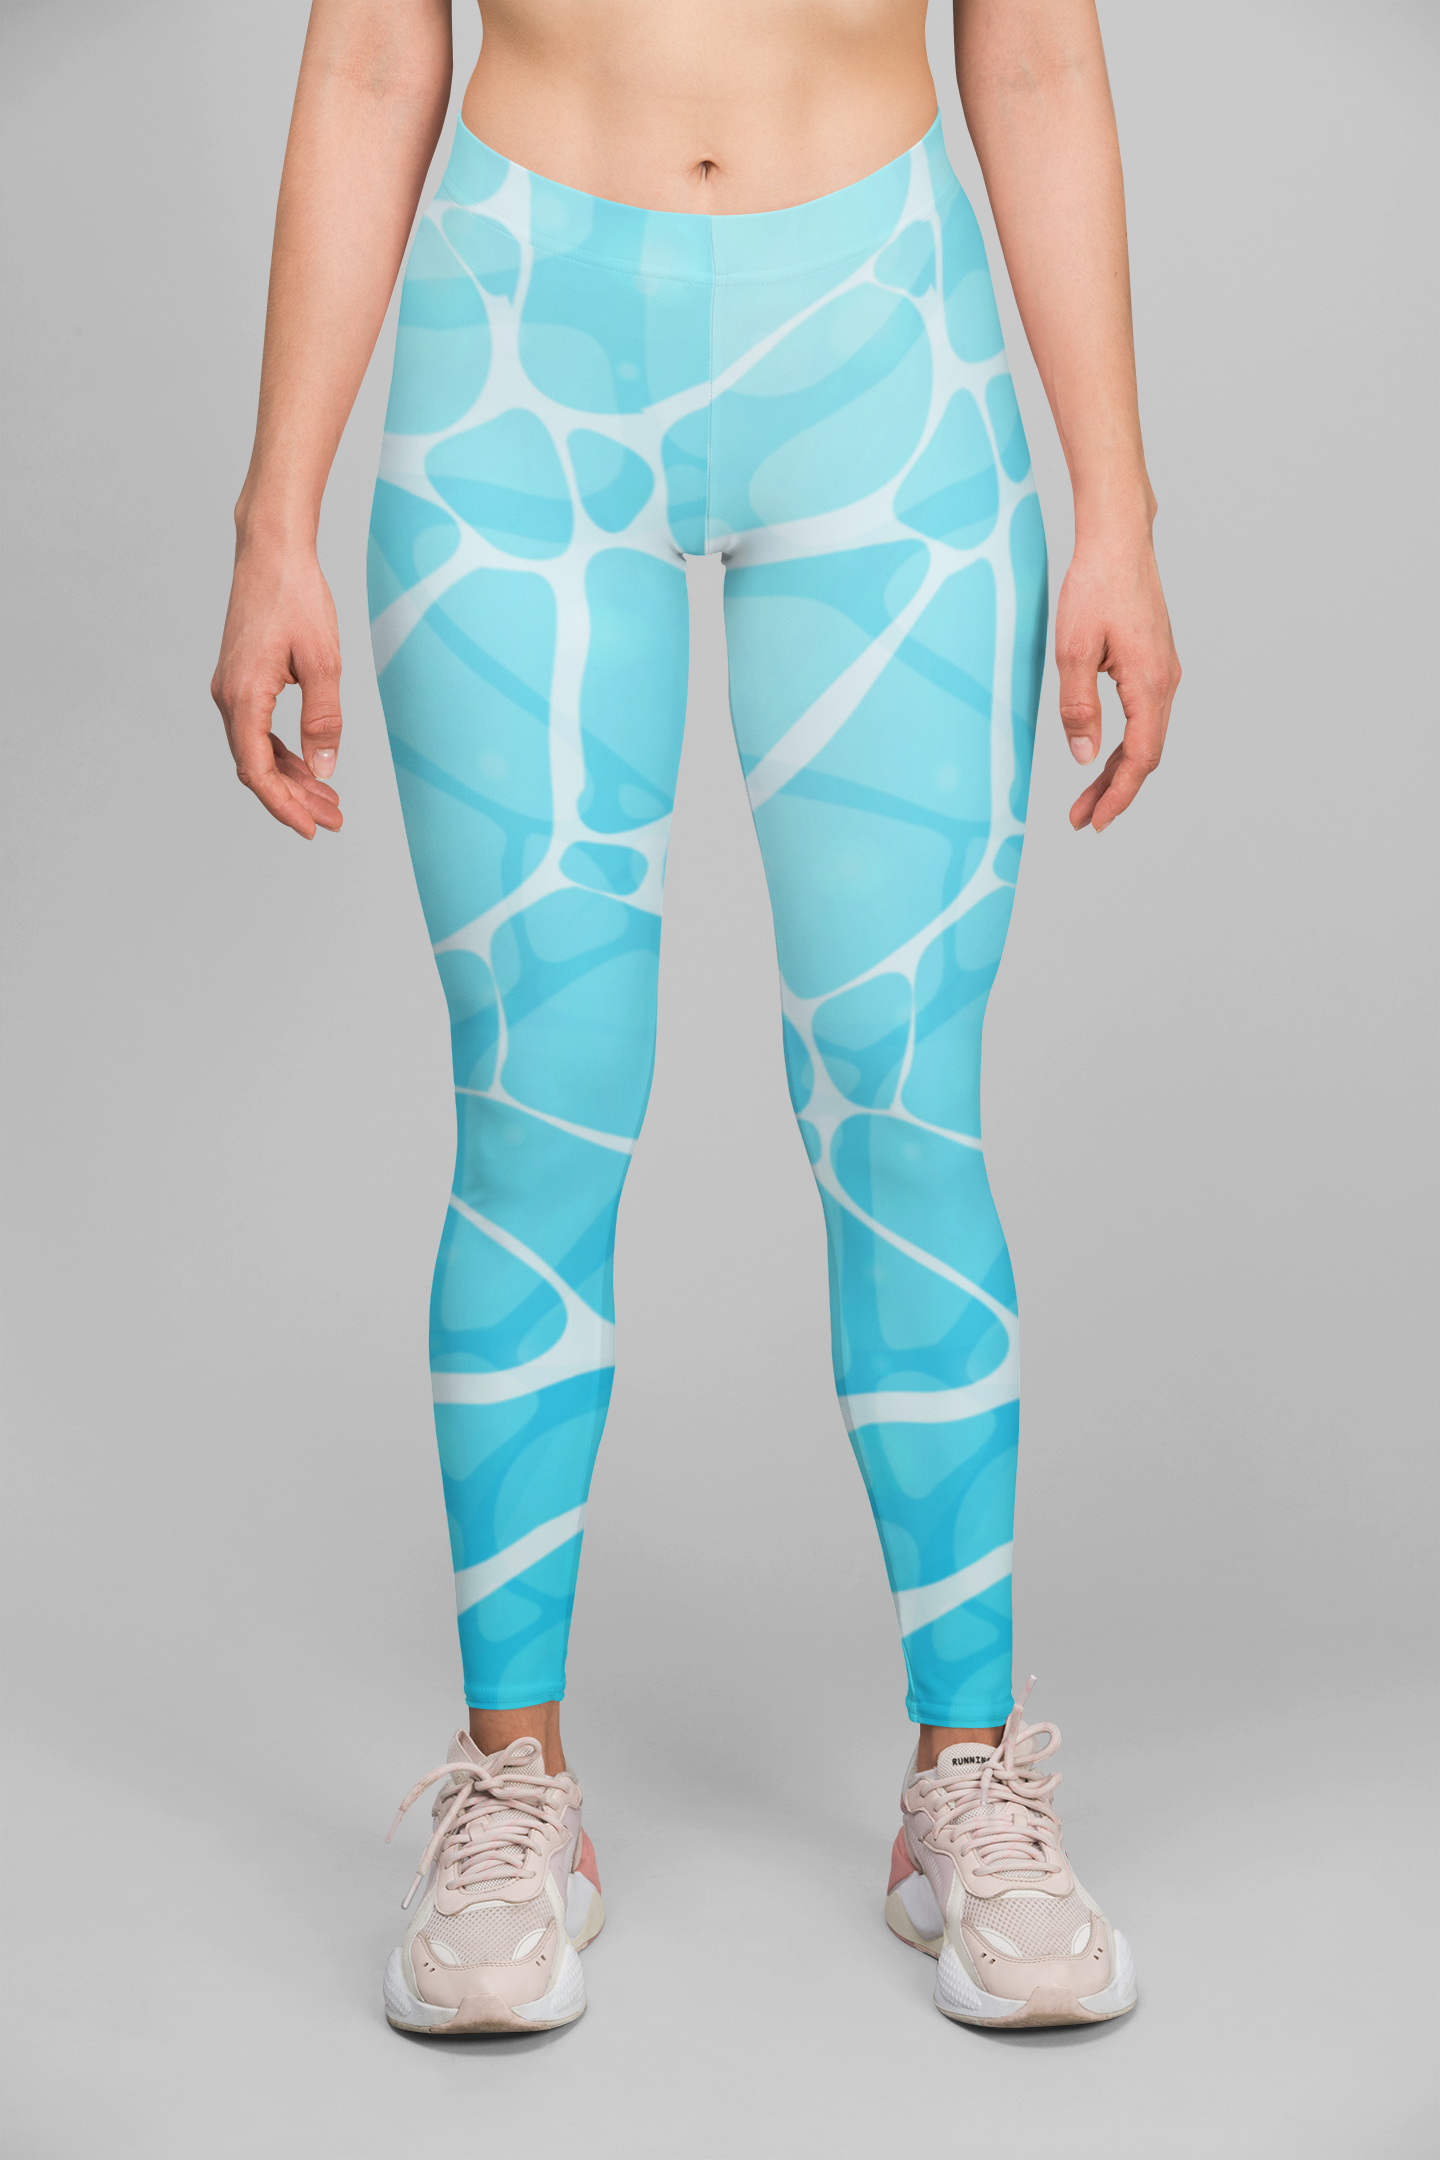 Turquoise Water Effect Print Legging